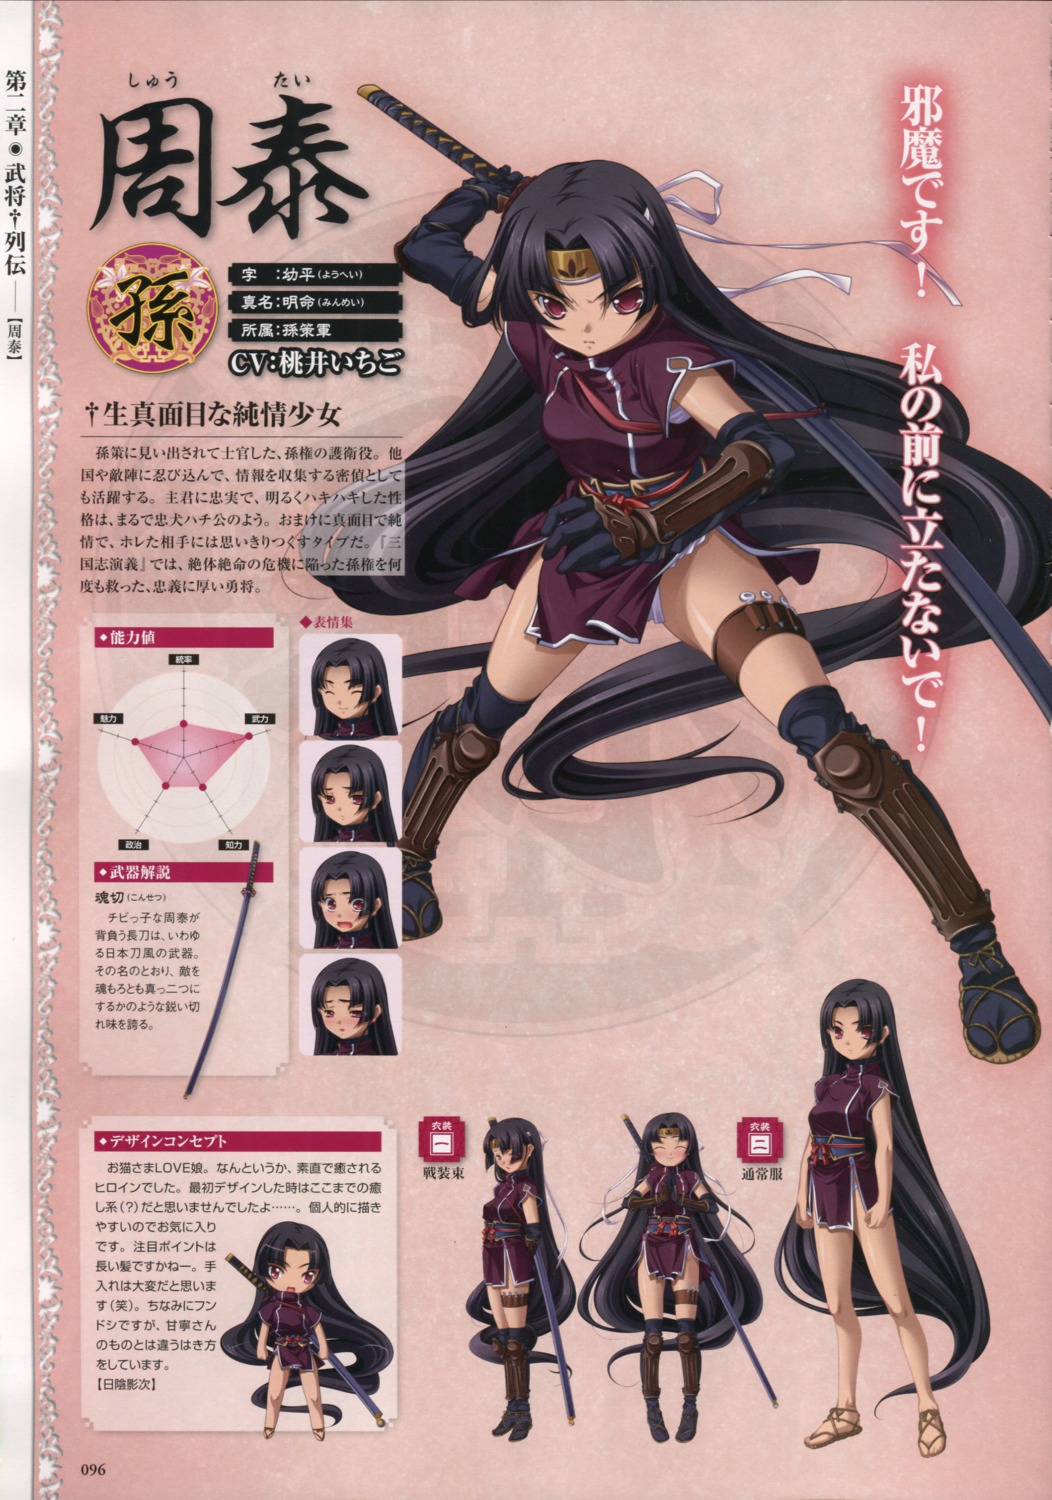 armor baseson character_design chibi expression garter koihime_musou profile_page shuutai sword weapon